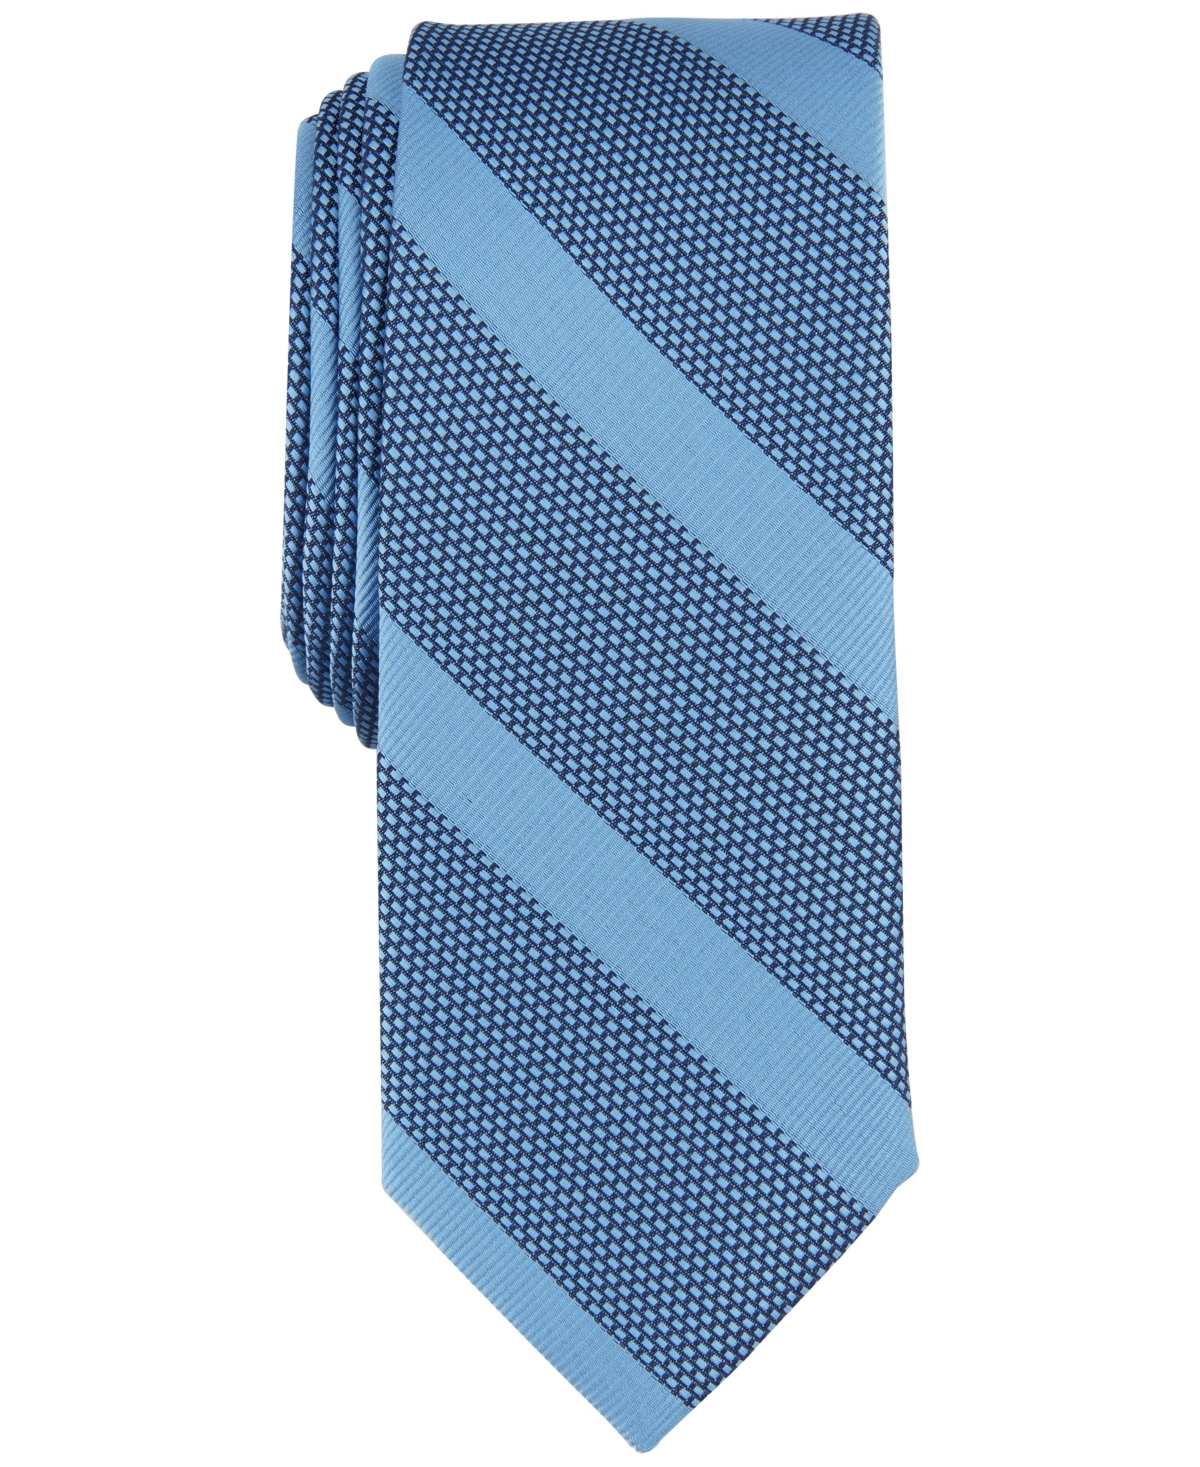 Men's Wilson Stripe Tie, Created for Macy's - Blue